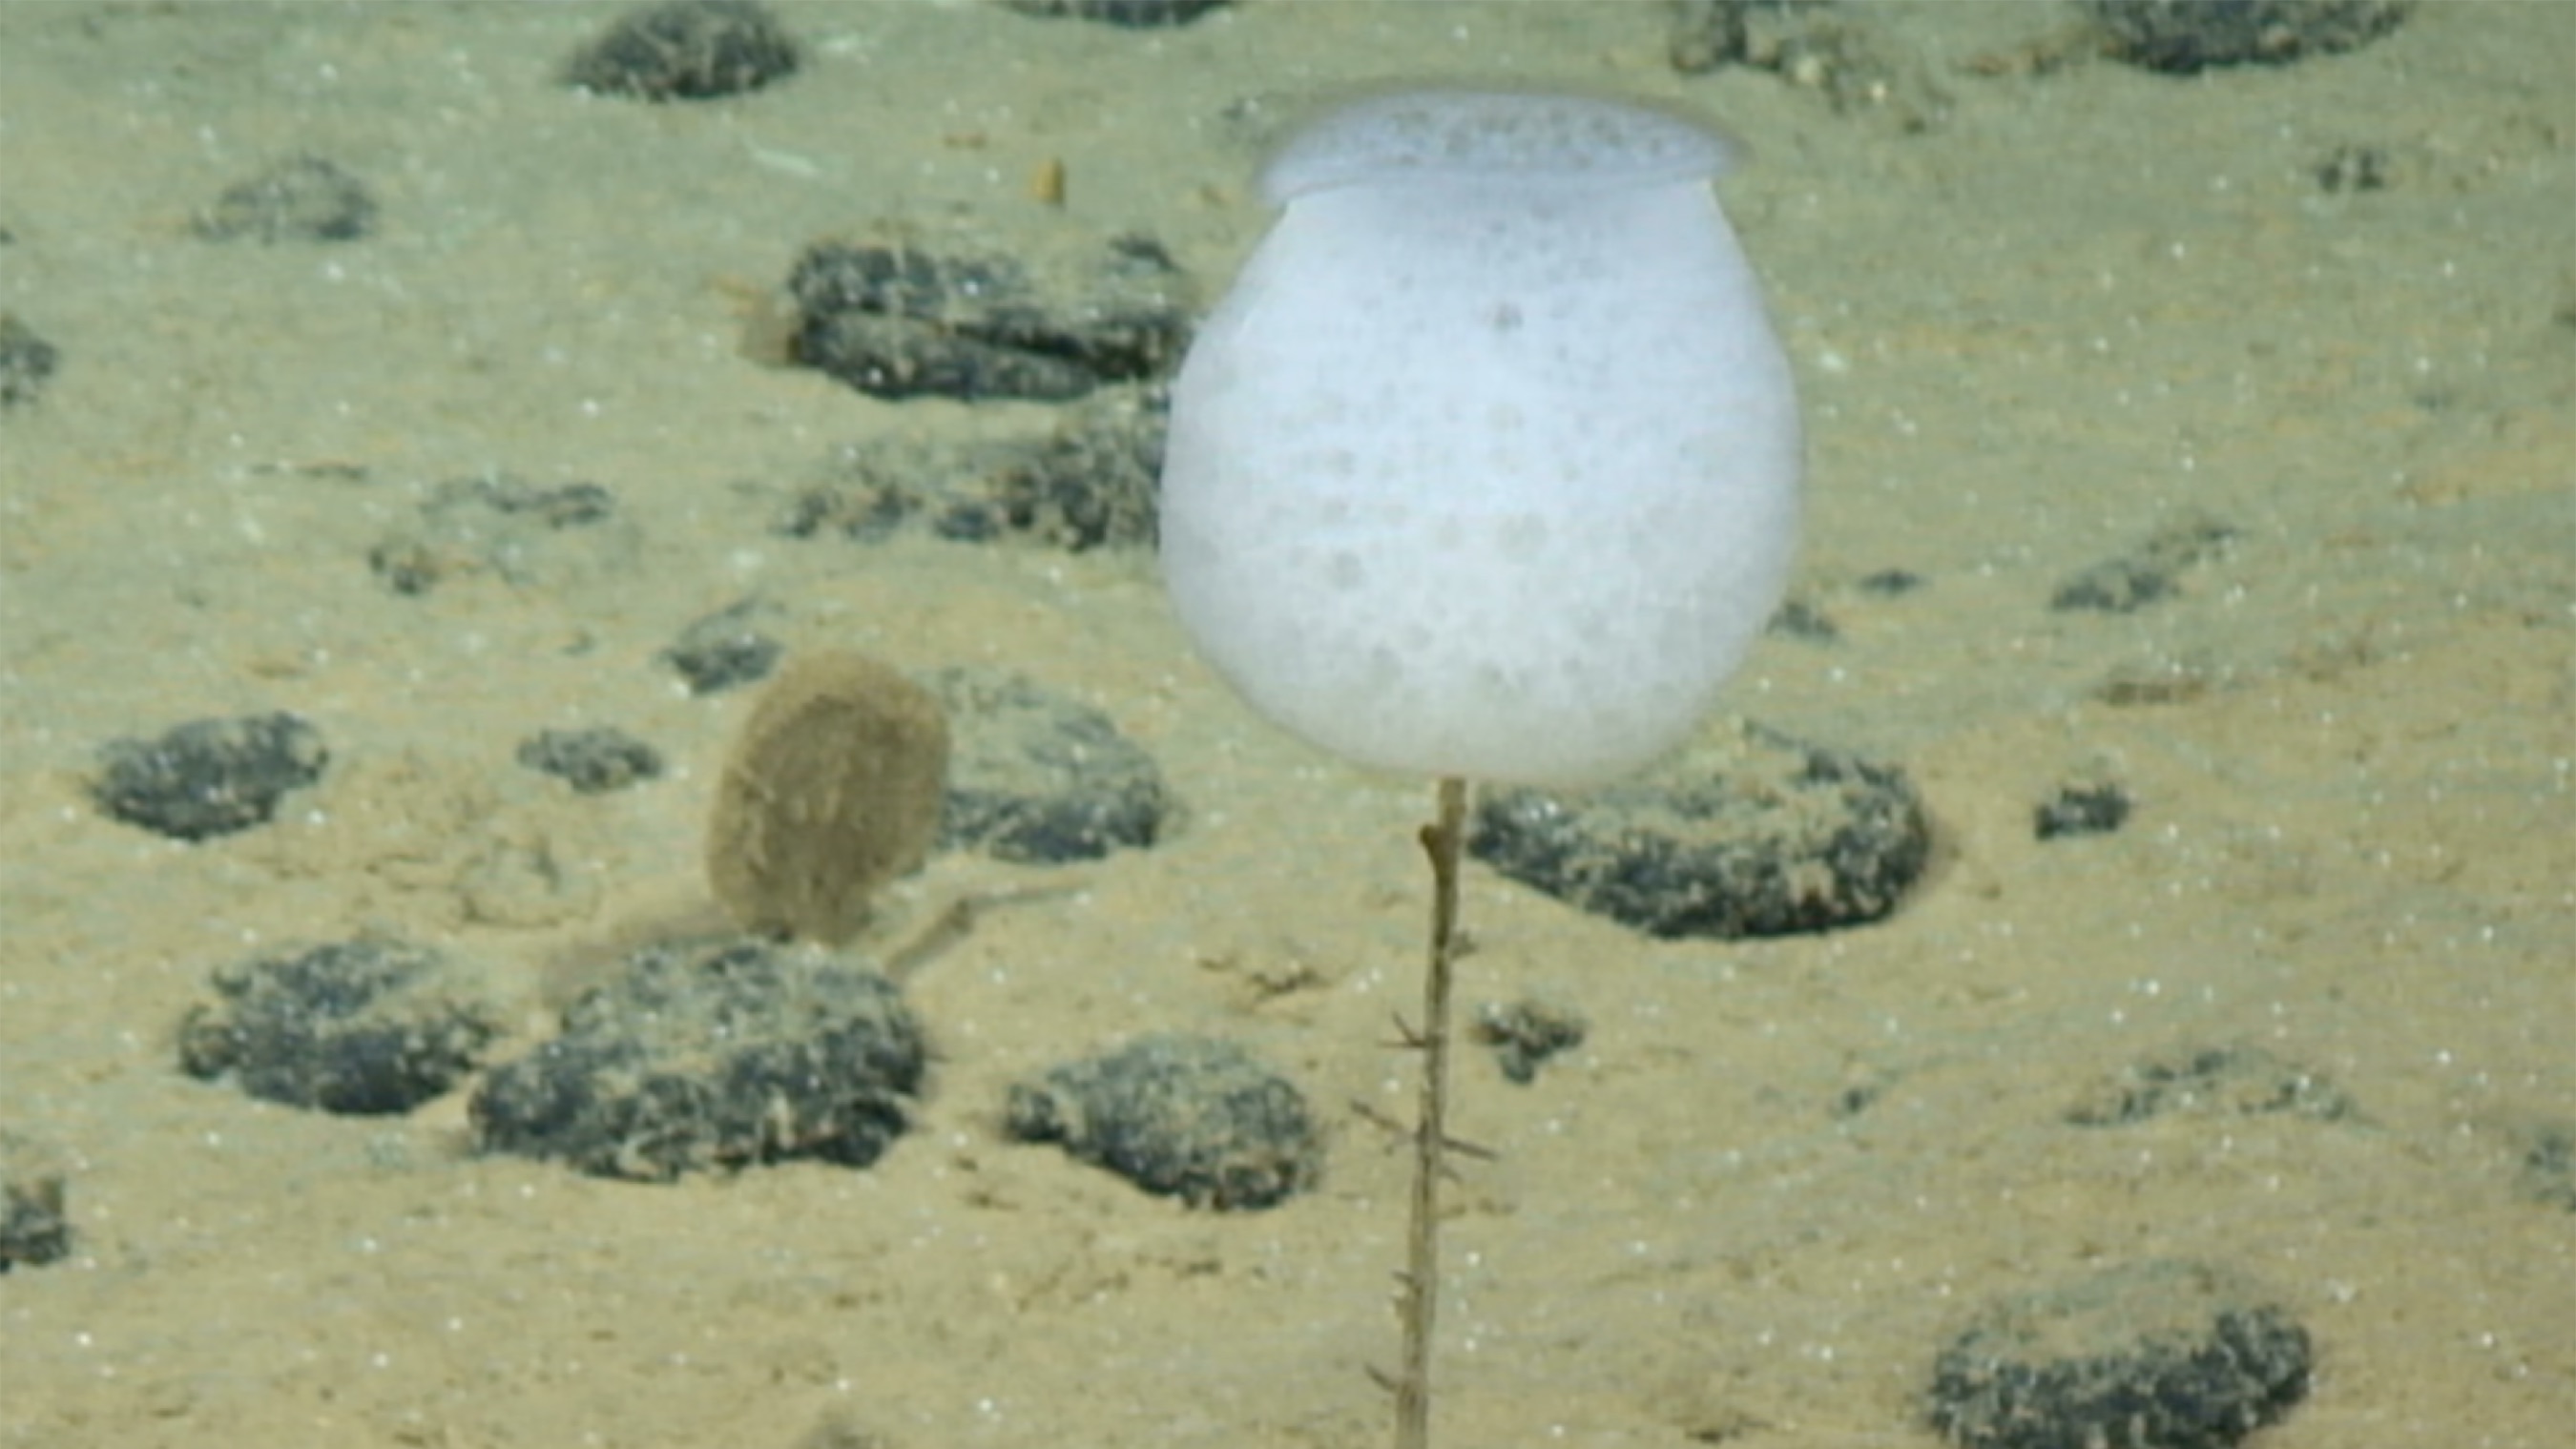 A white sea sponge (hyalonema) found in the Pacific Ocean.